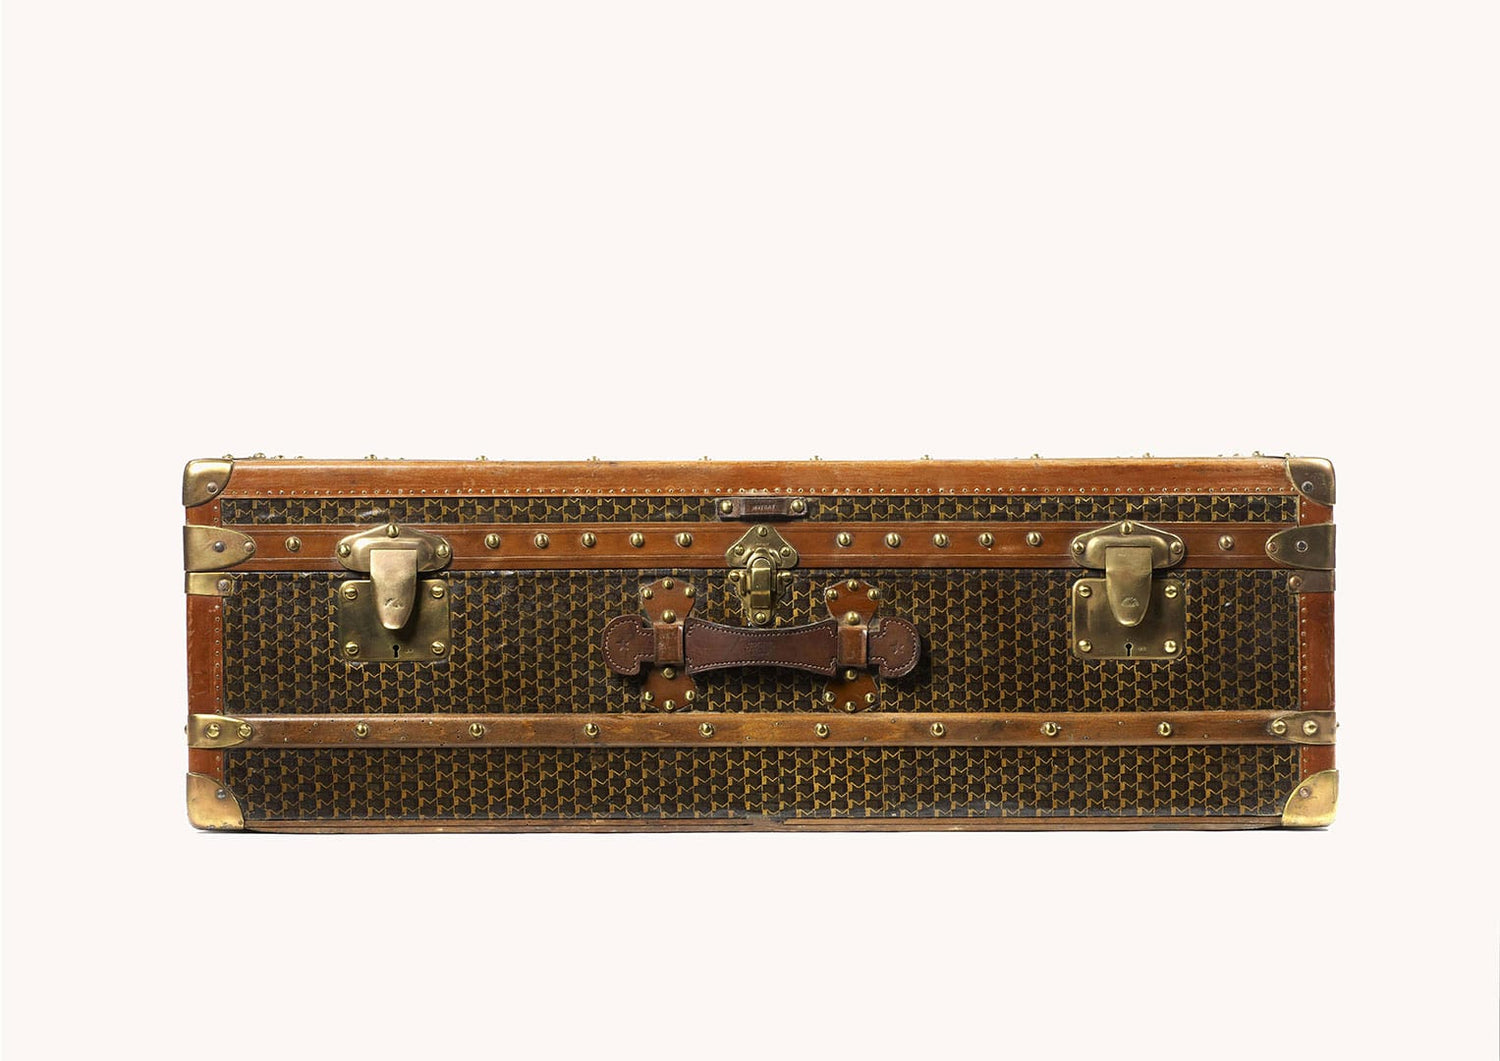 Handbag History: Parisian Trunk-Maker Moynat, Founded in 1849 - Coffee and  Handbags